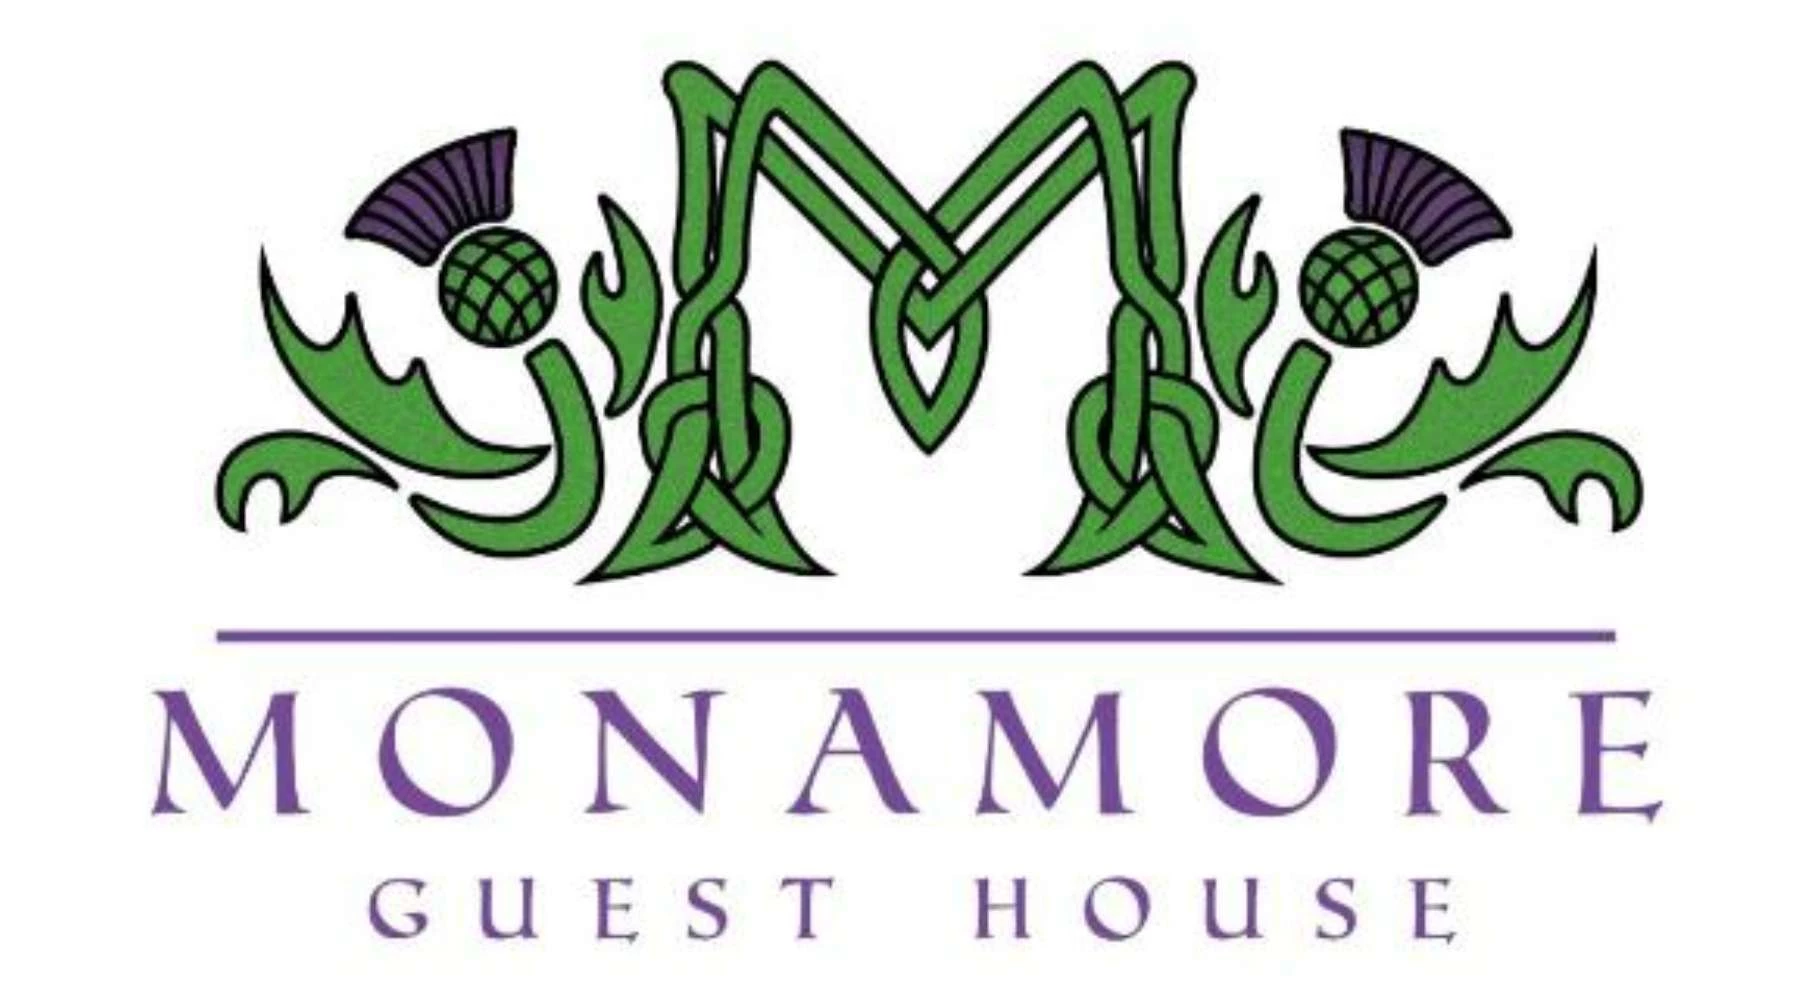 Monamore Guest House, Lamlash (1)